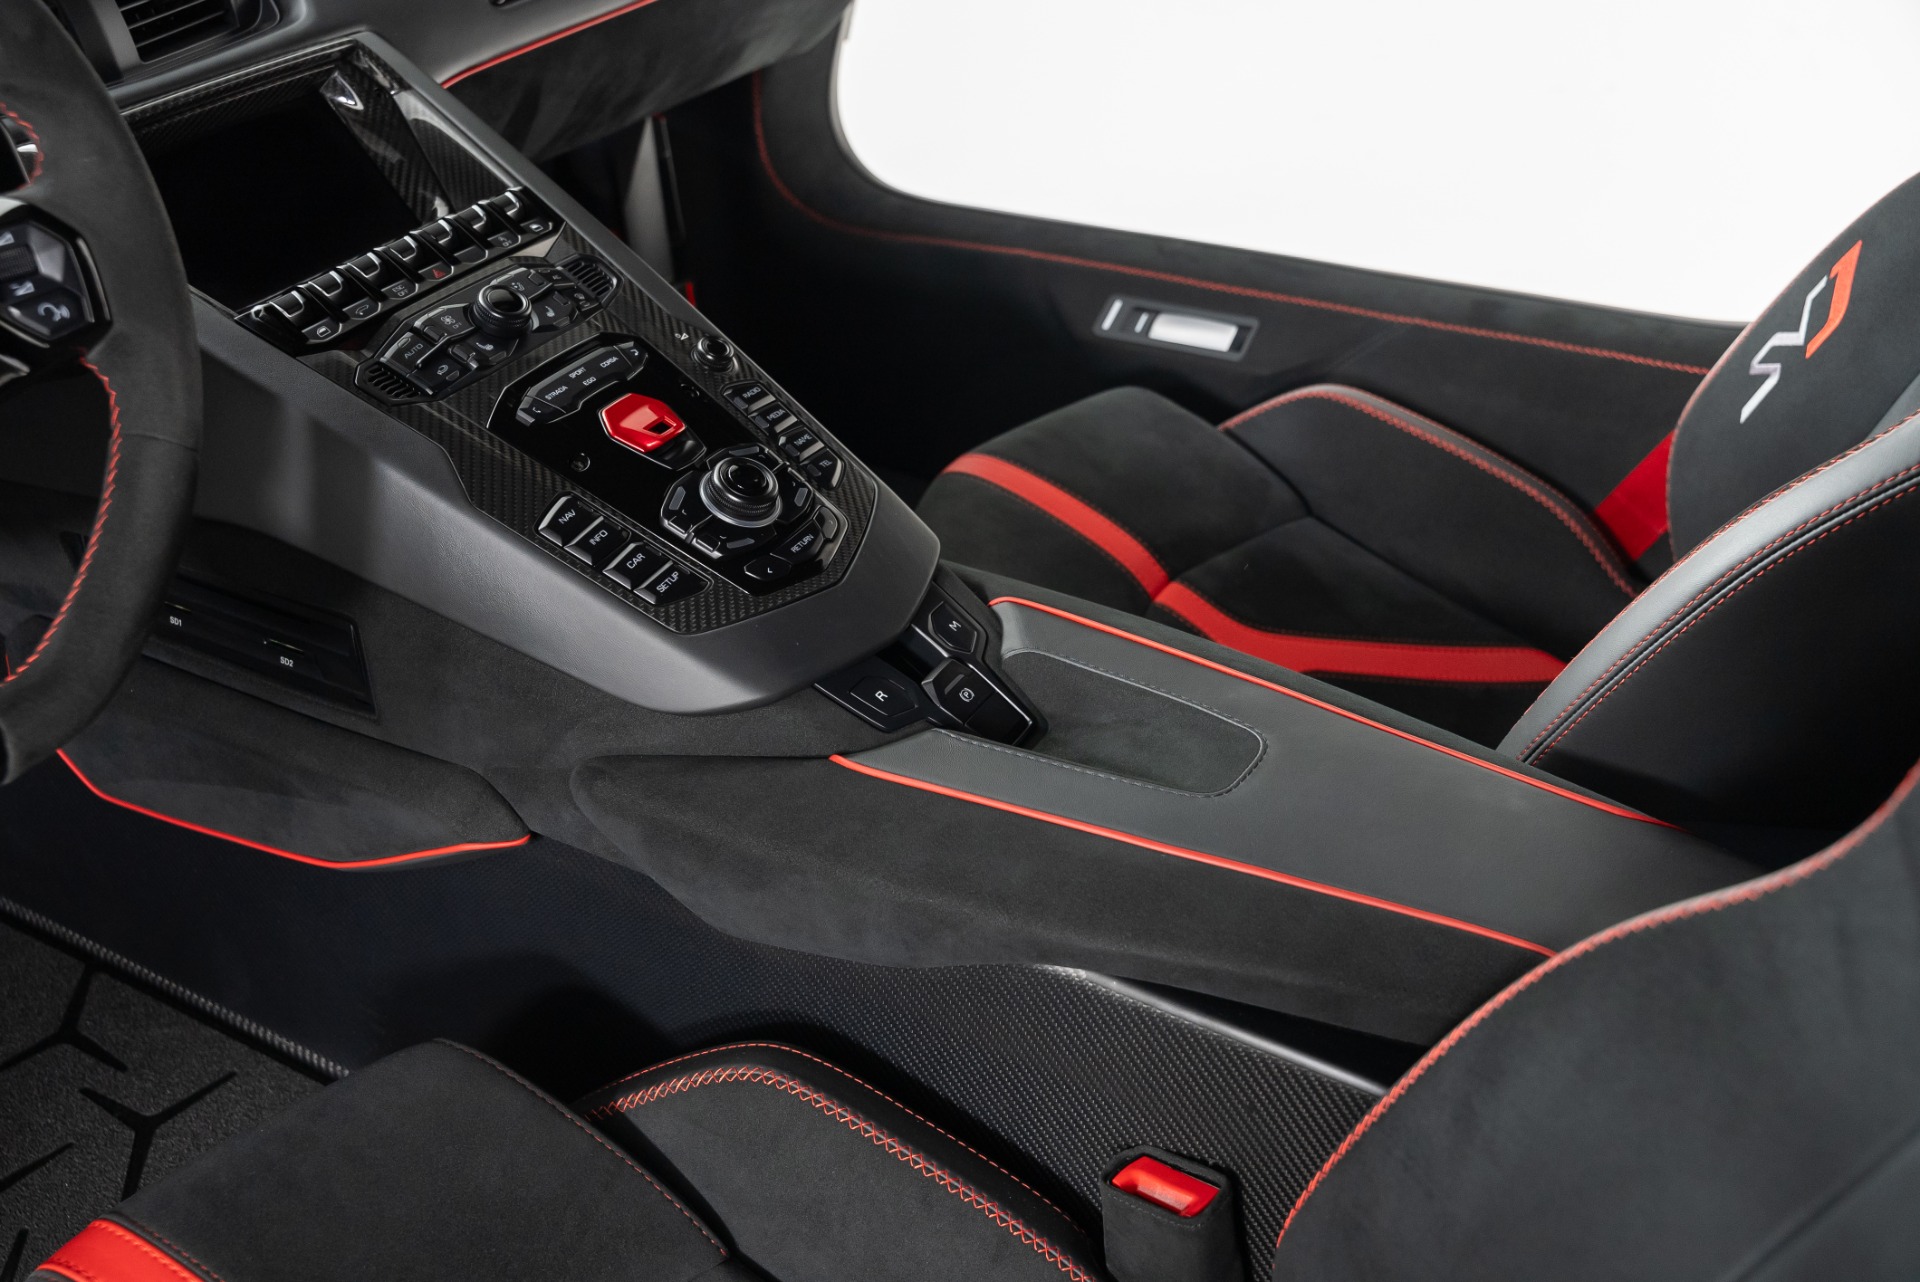 2022 Lamborghini Aventador SVJ - Sound, Interior and Exterior